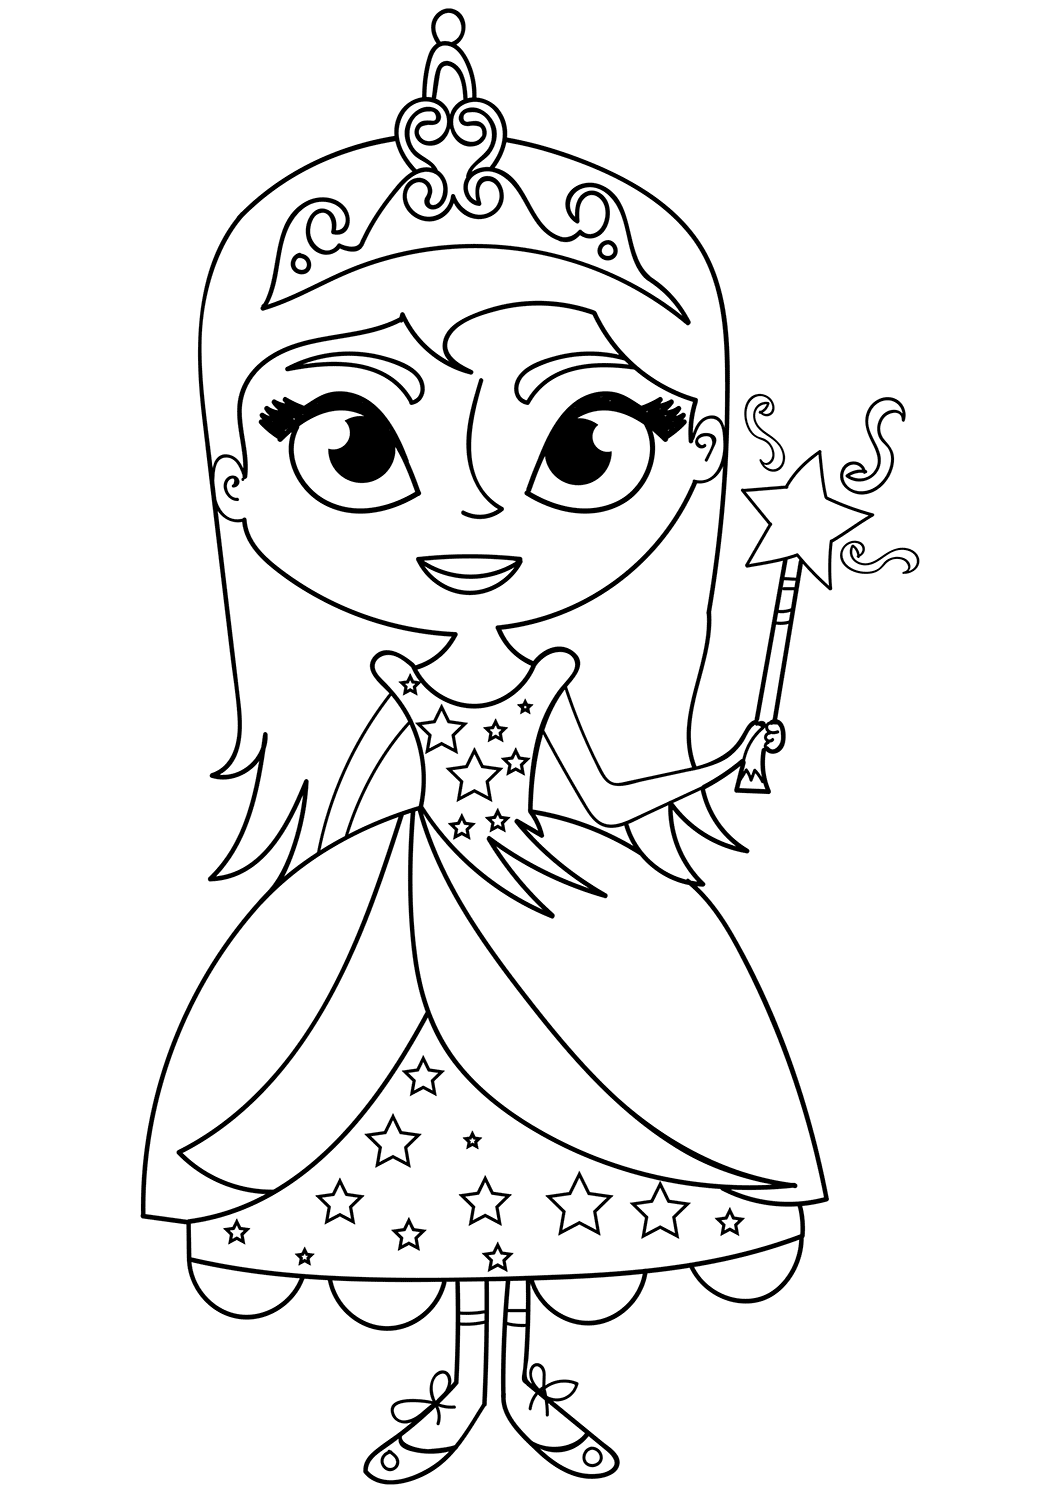 Fairy Princess 2 Coloring Page